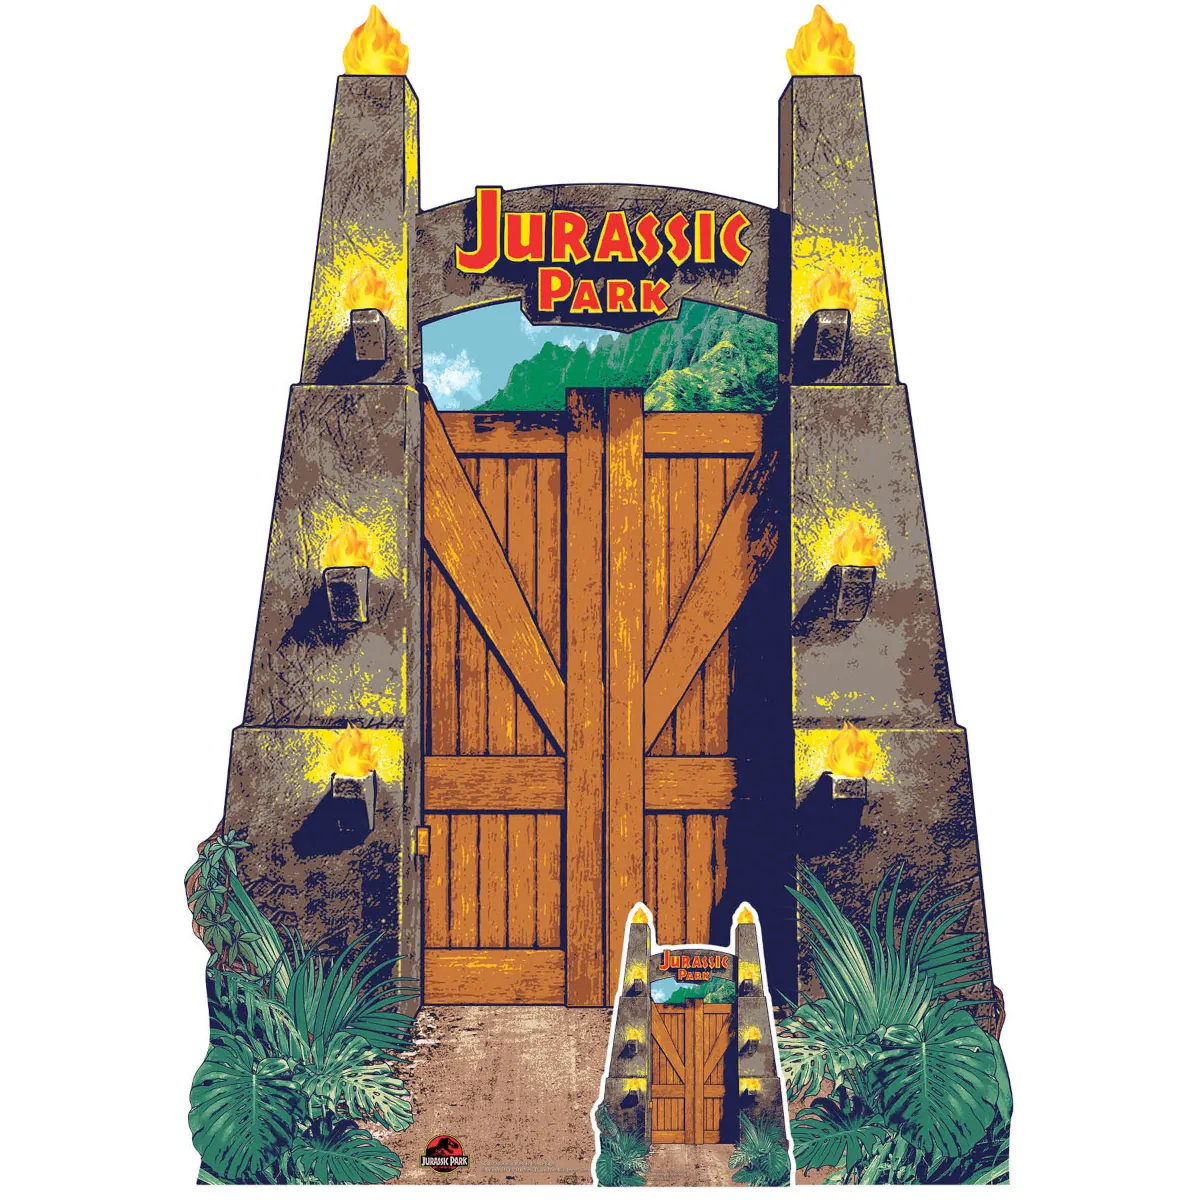 SC4079 Jurassic Park Entrance Sign Official Medium + Mini Cardboard Cutout Standee Front